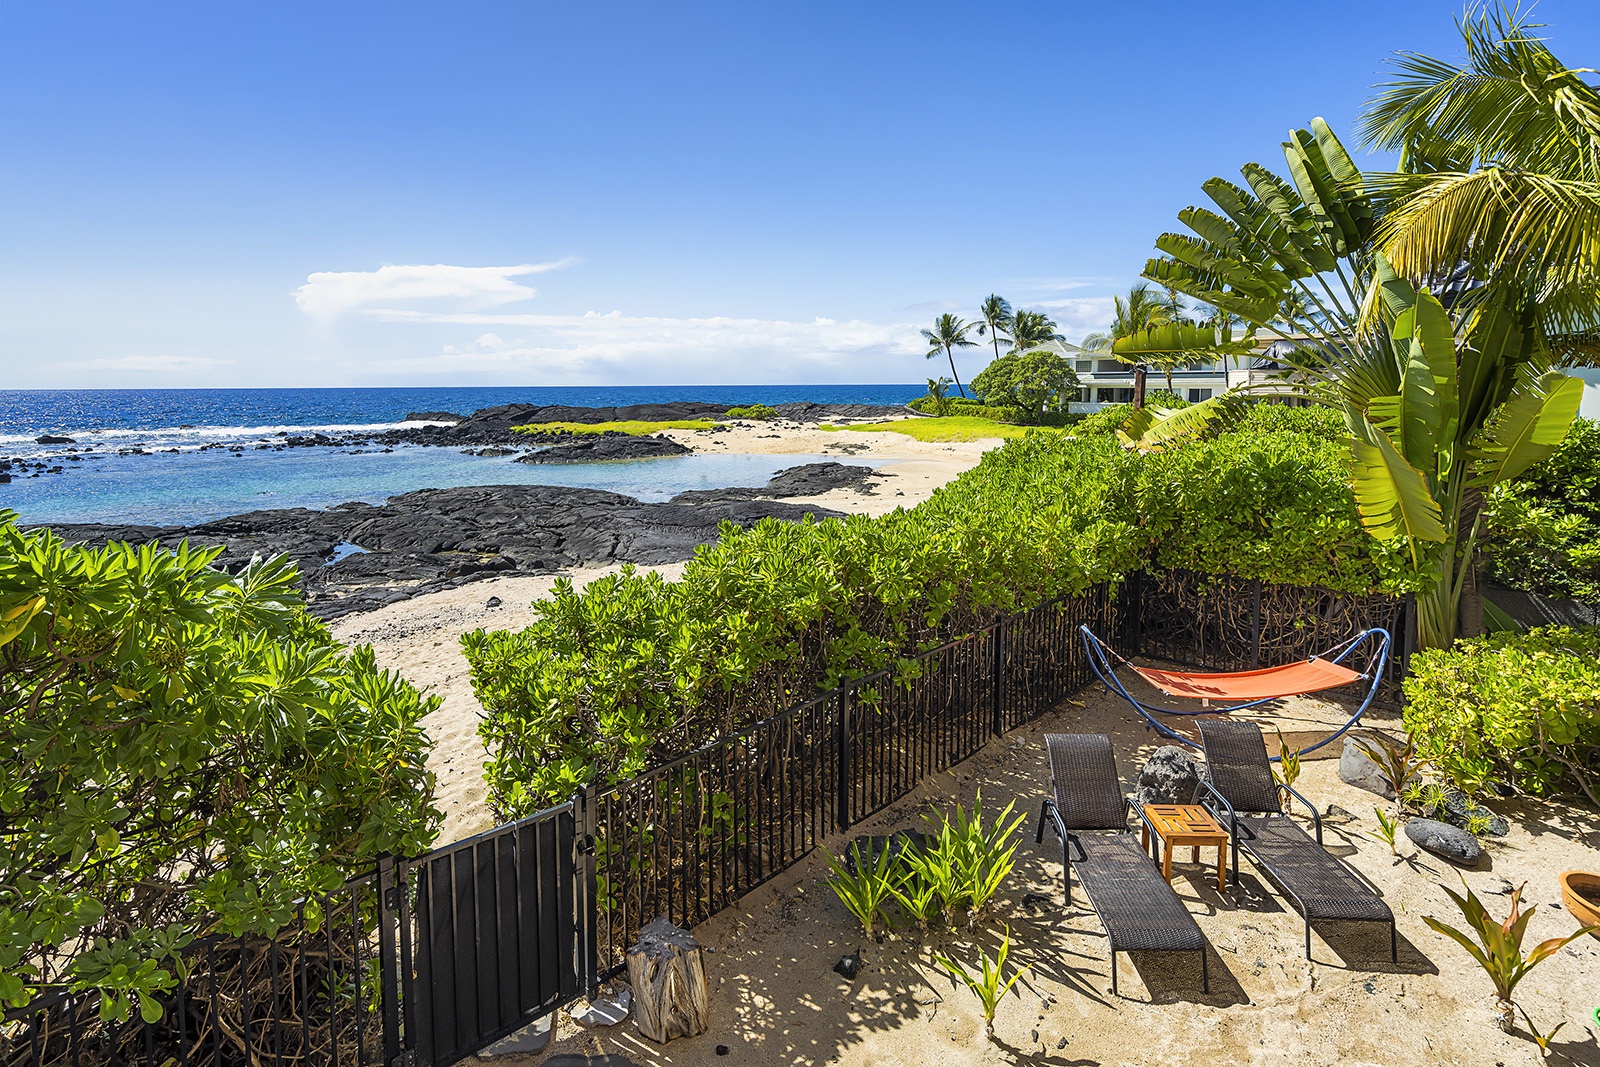 Kailua Kona Vacation Rentals, Mermaid Cove - Man made beach area in the fenced yard!